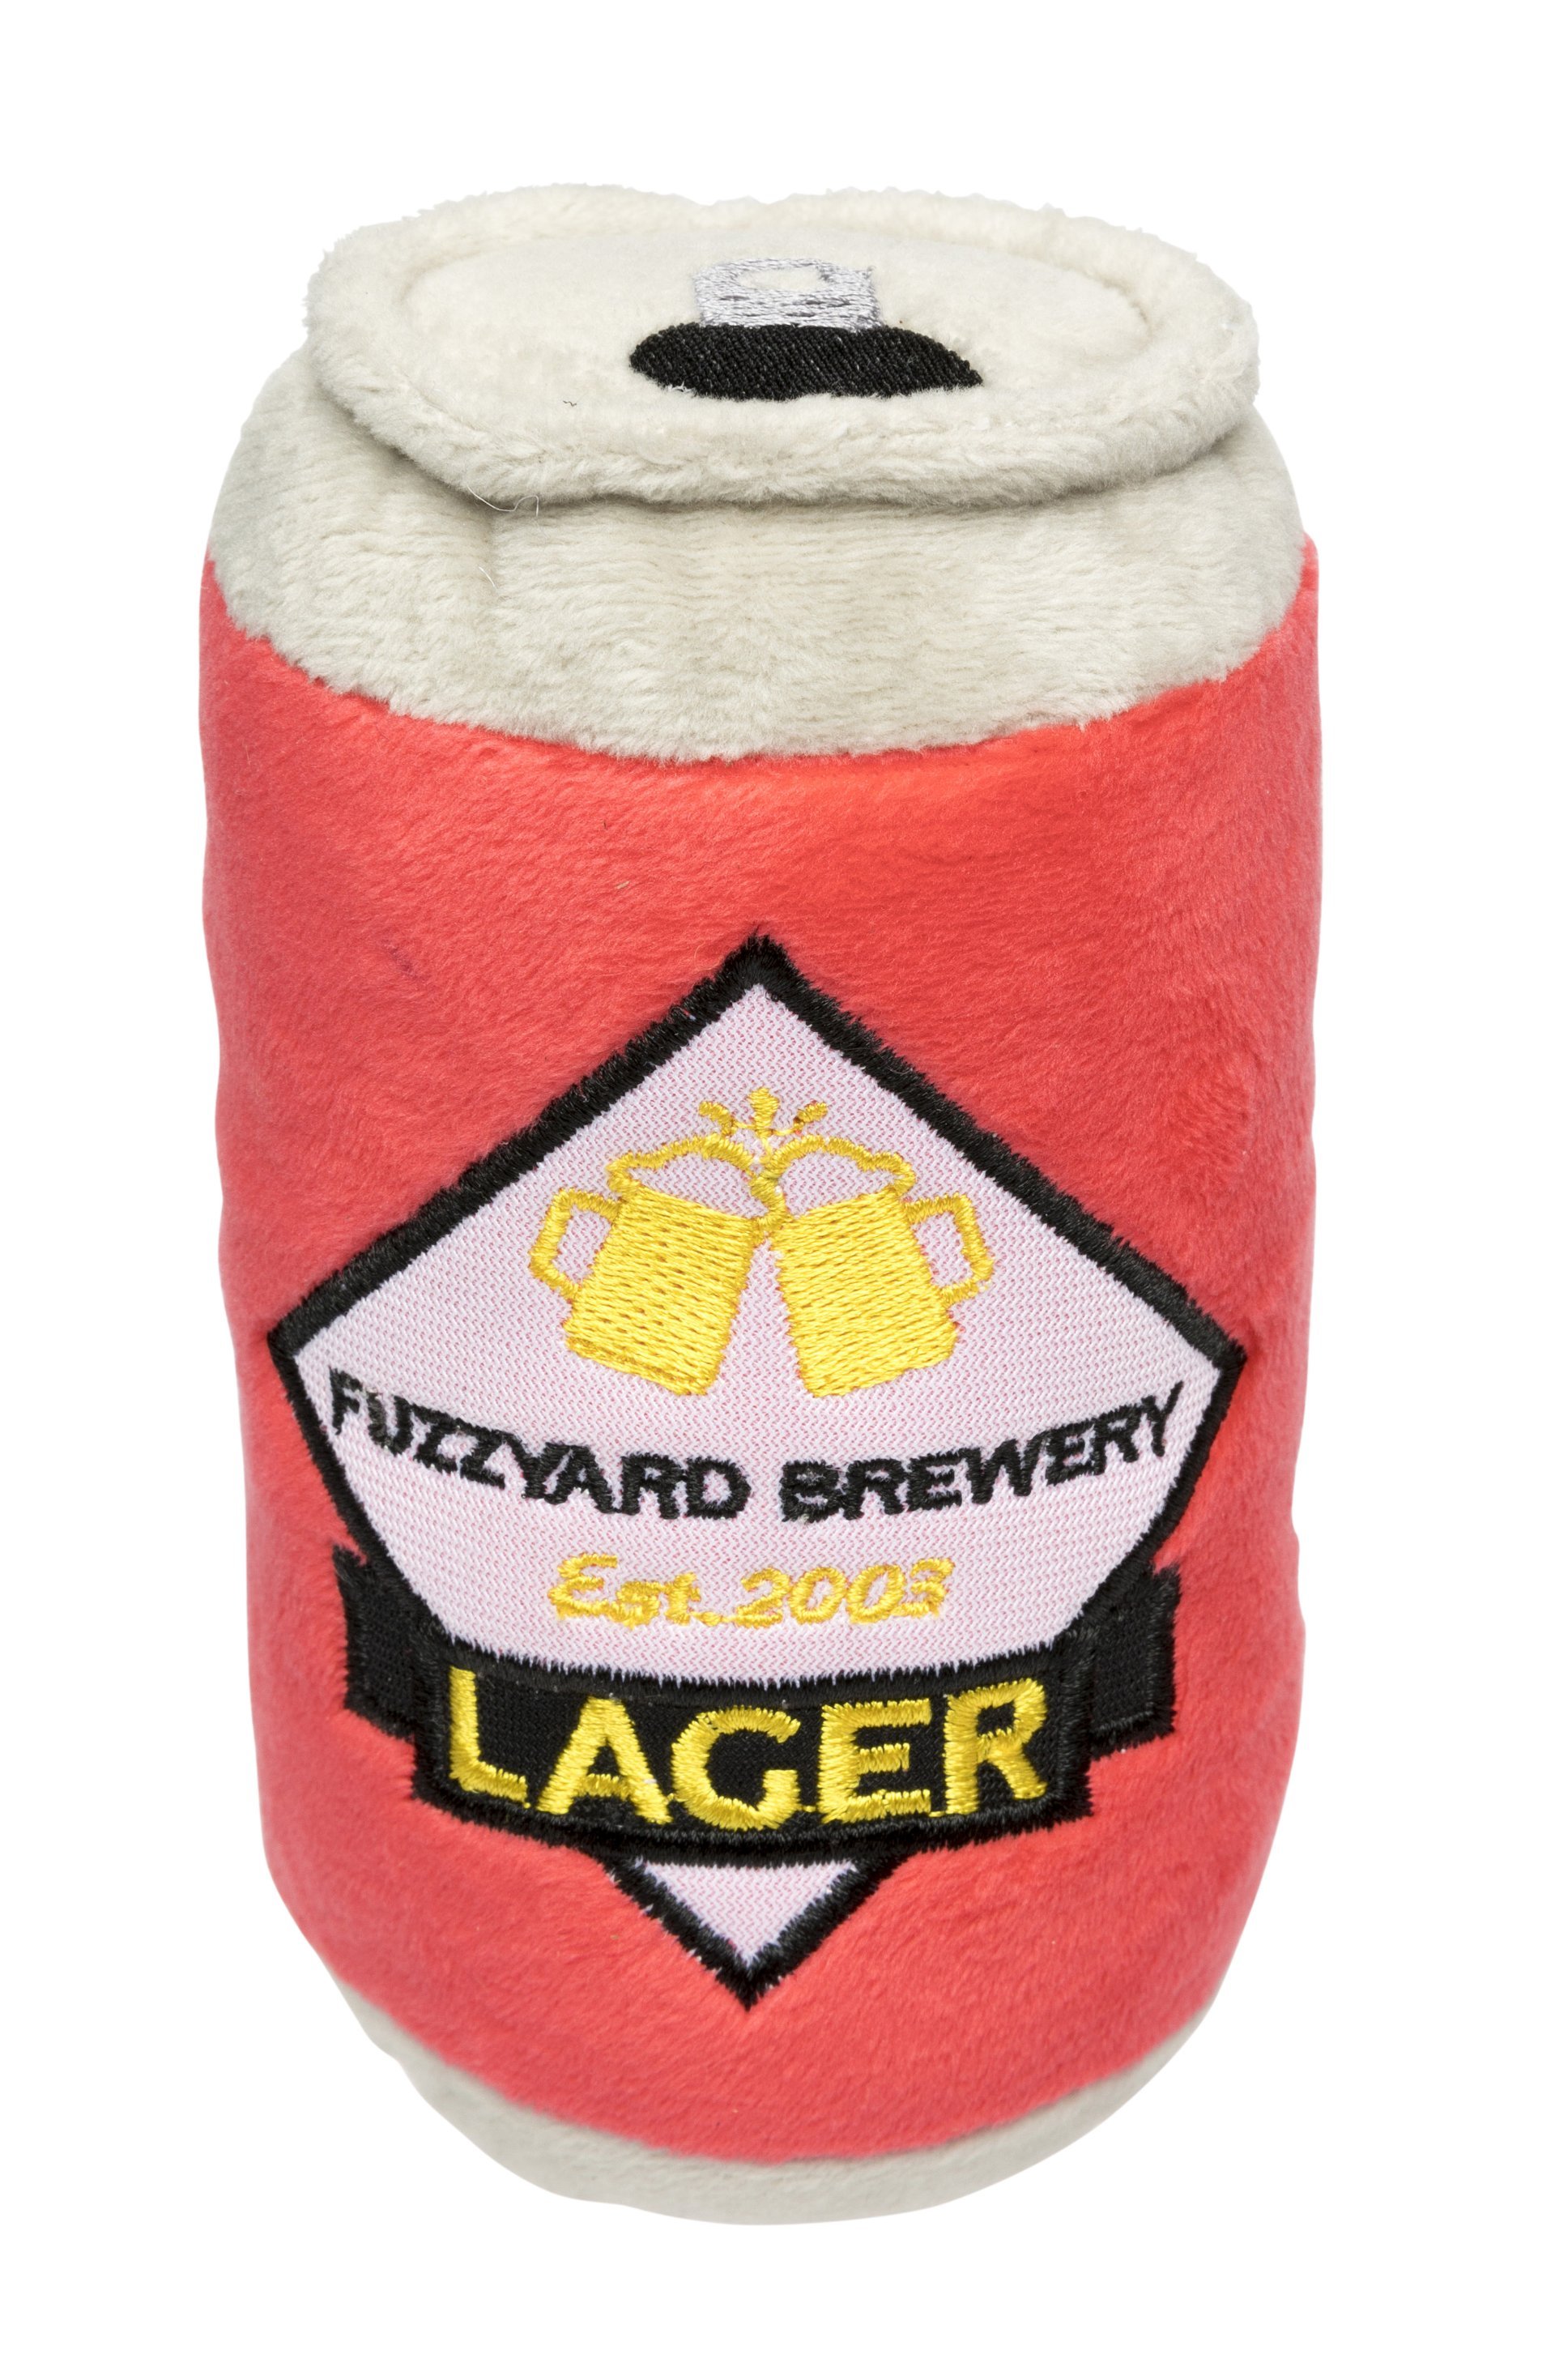 Fuzzyard - Bier